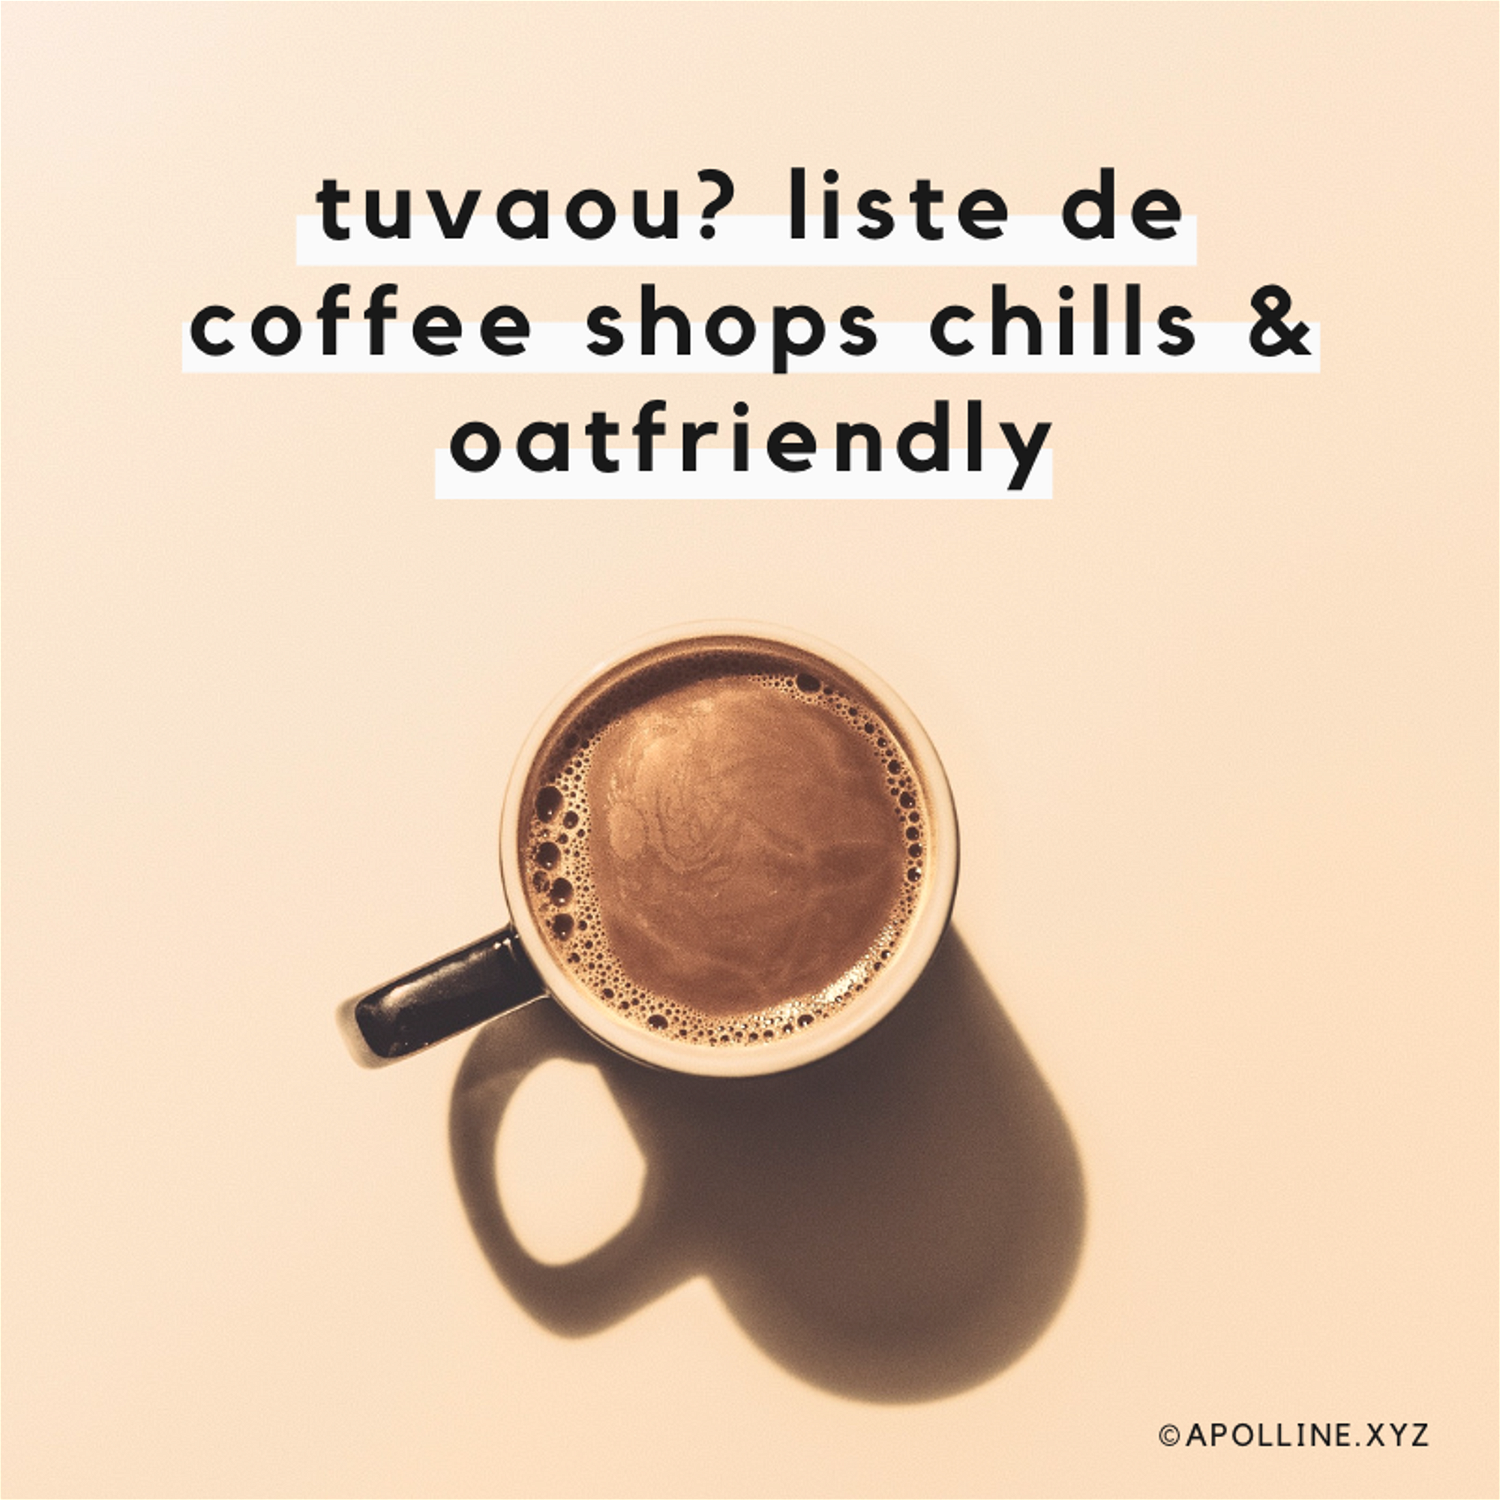 tuvaou? liste de coffee shops chills & oatfriendly.png